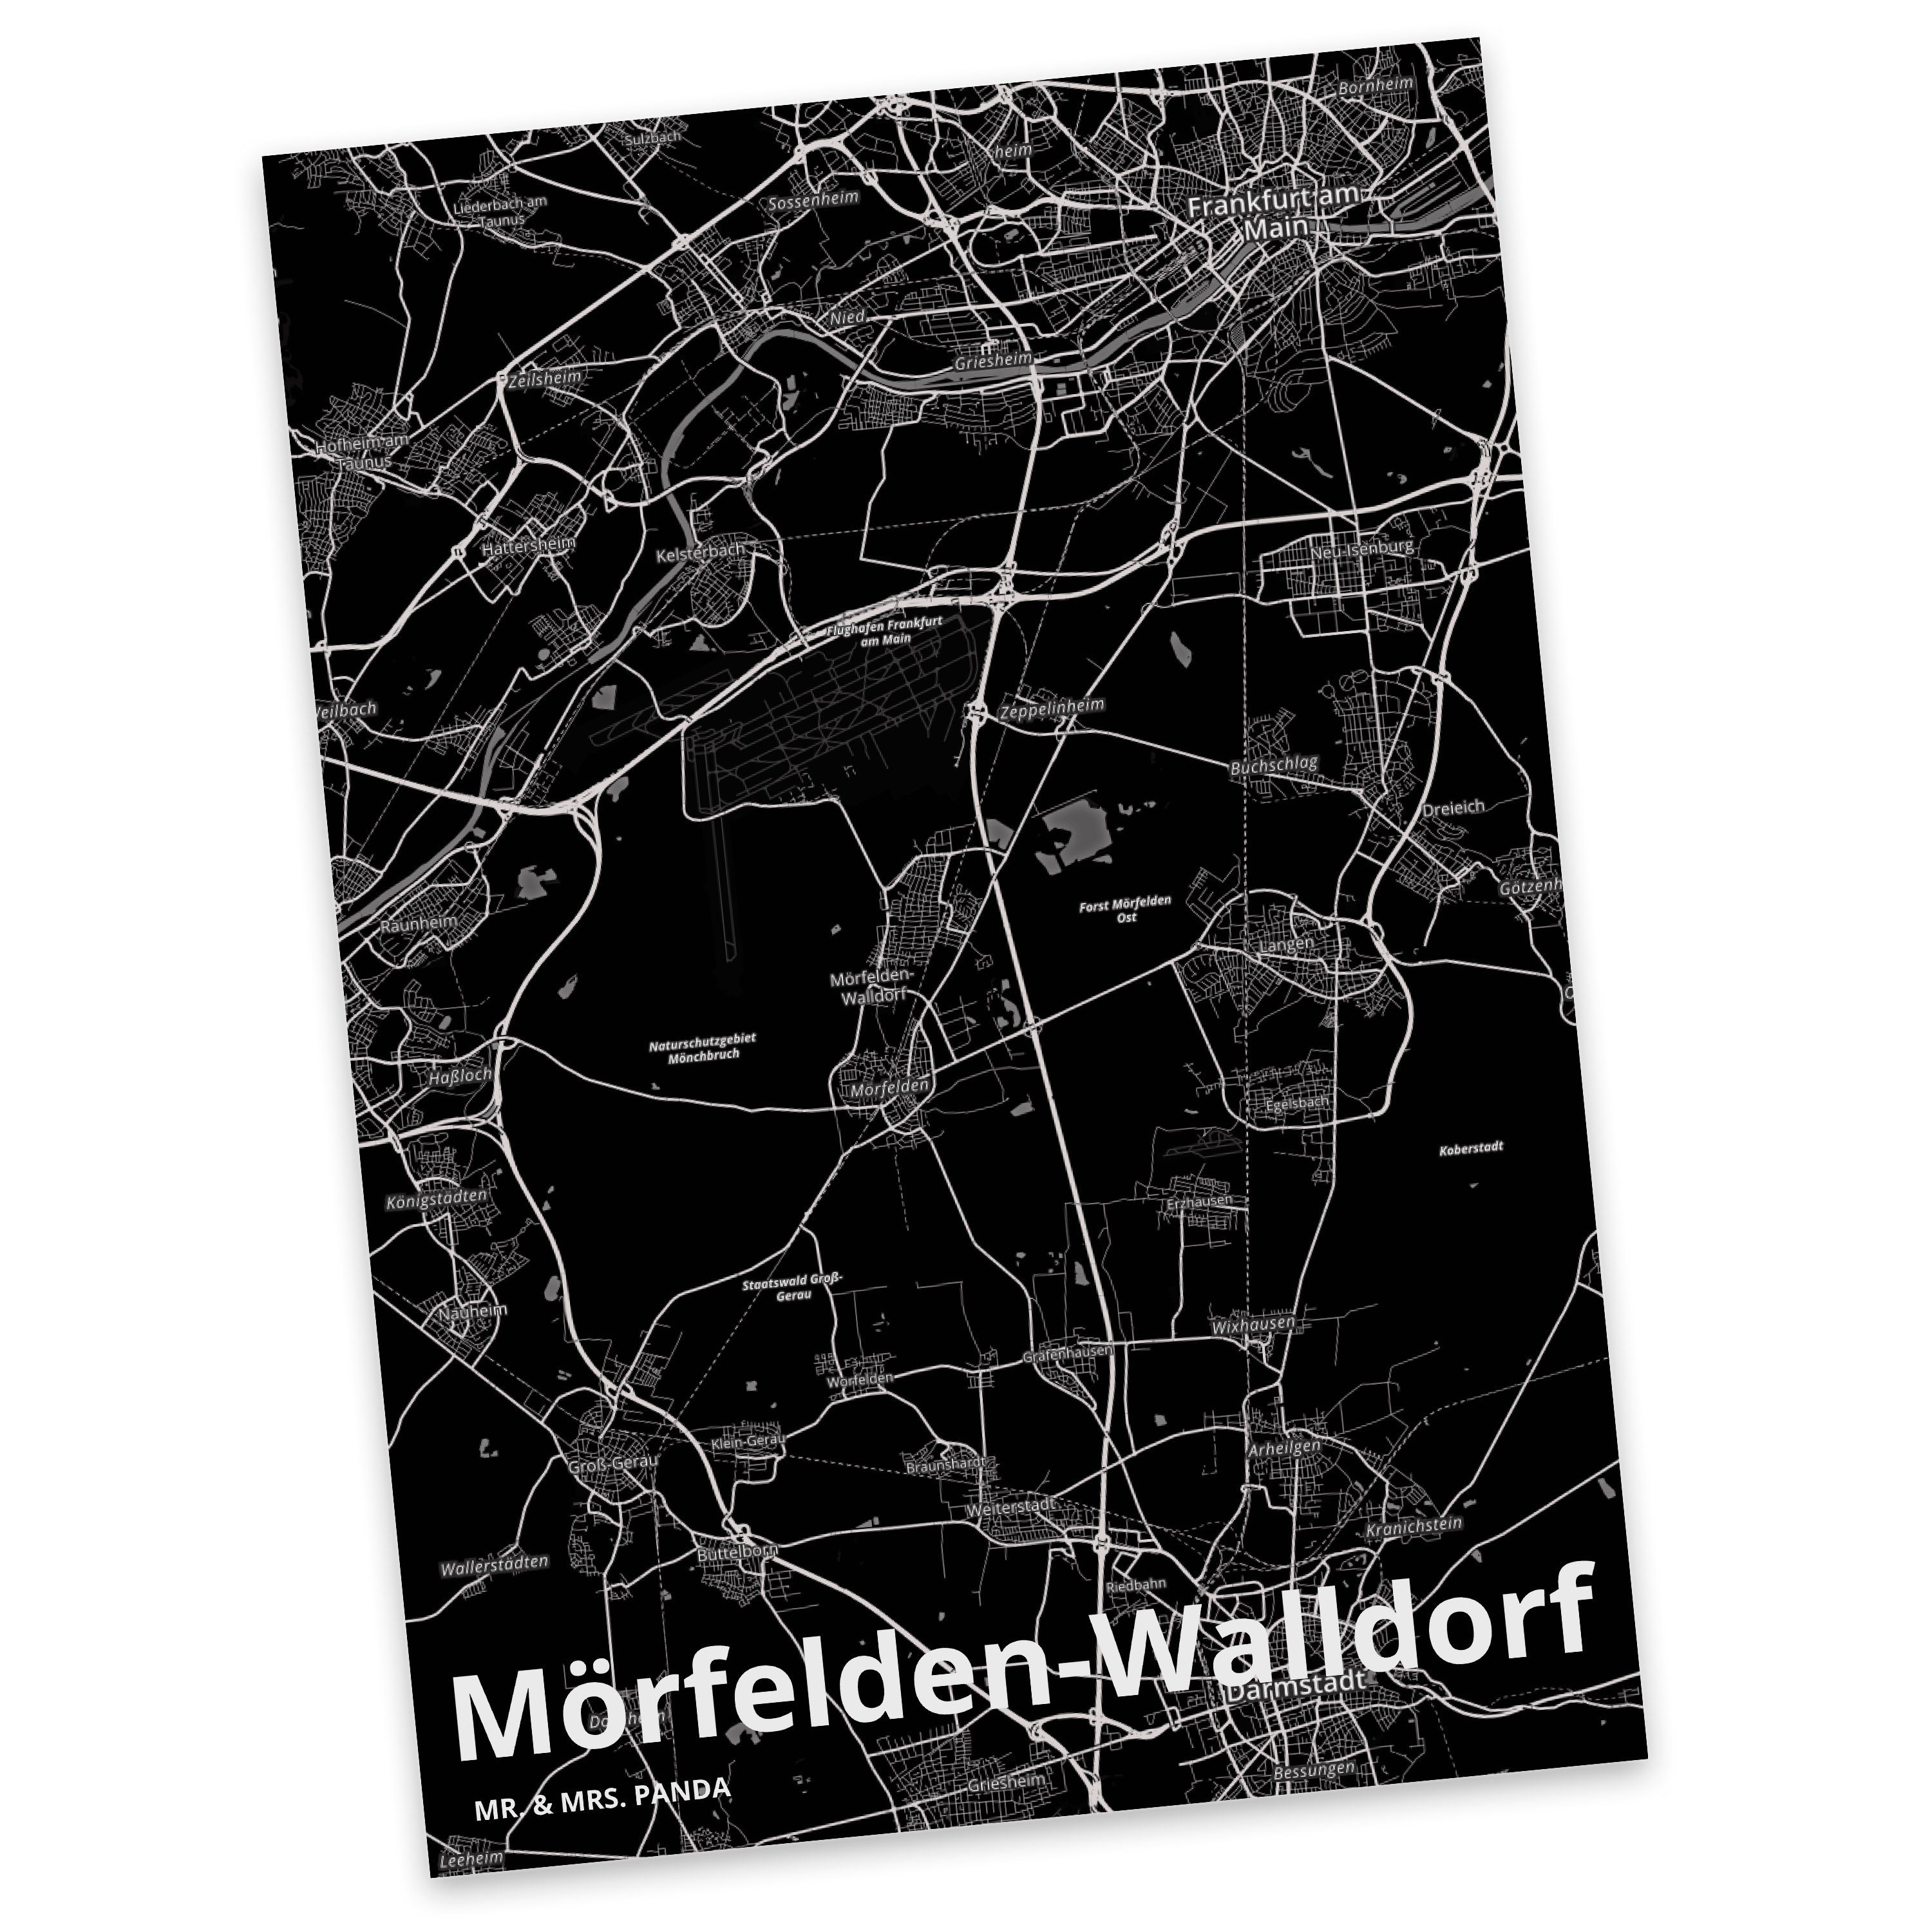 Mr. & Mrs. Panda Postkarte Mörfelden-Walldorf - Geschenk, Städte, Ort, Geburtstagskarte, Geschen